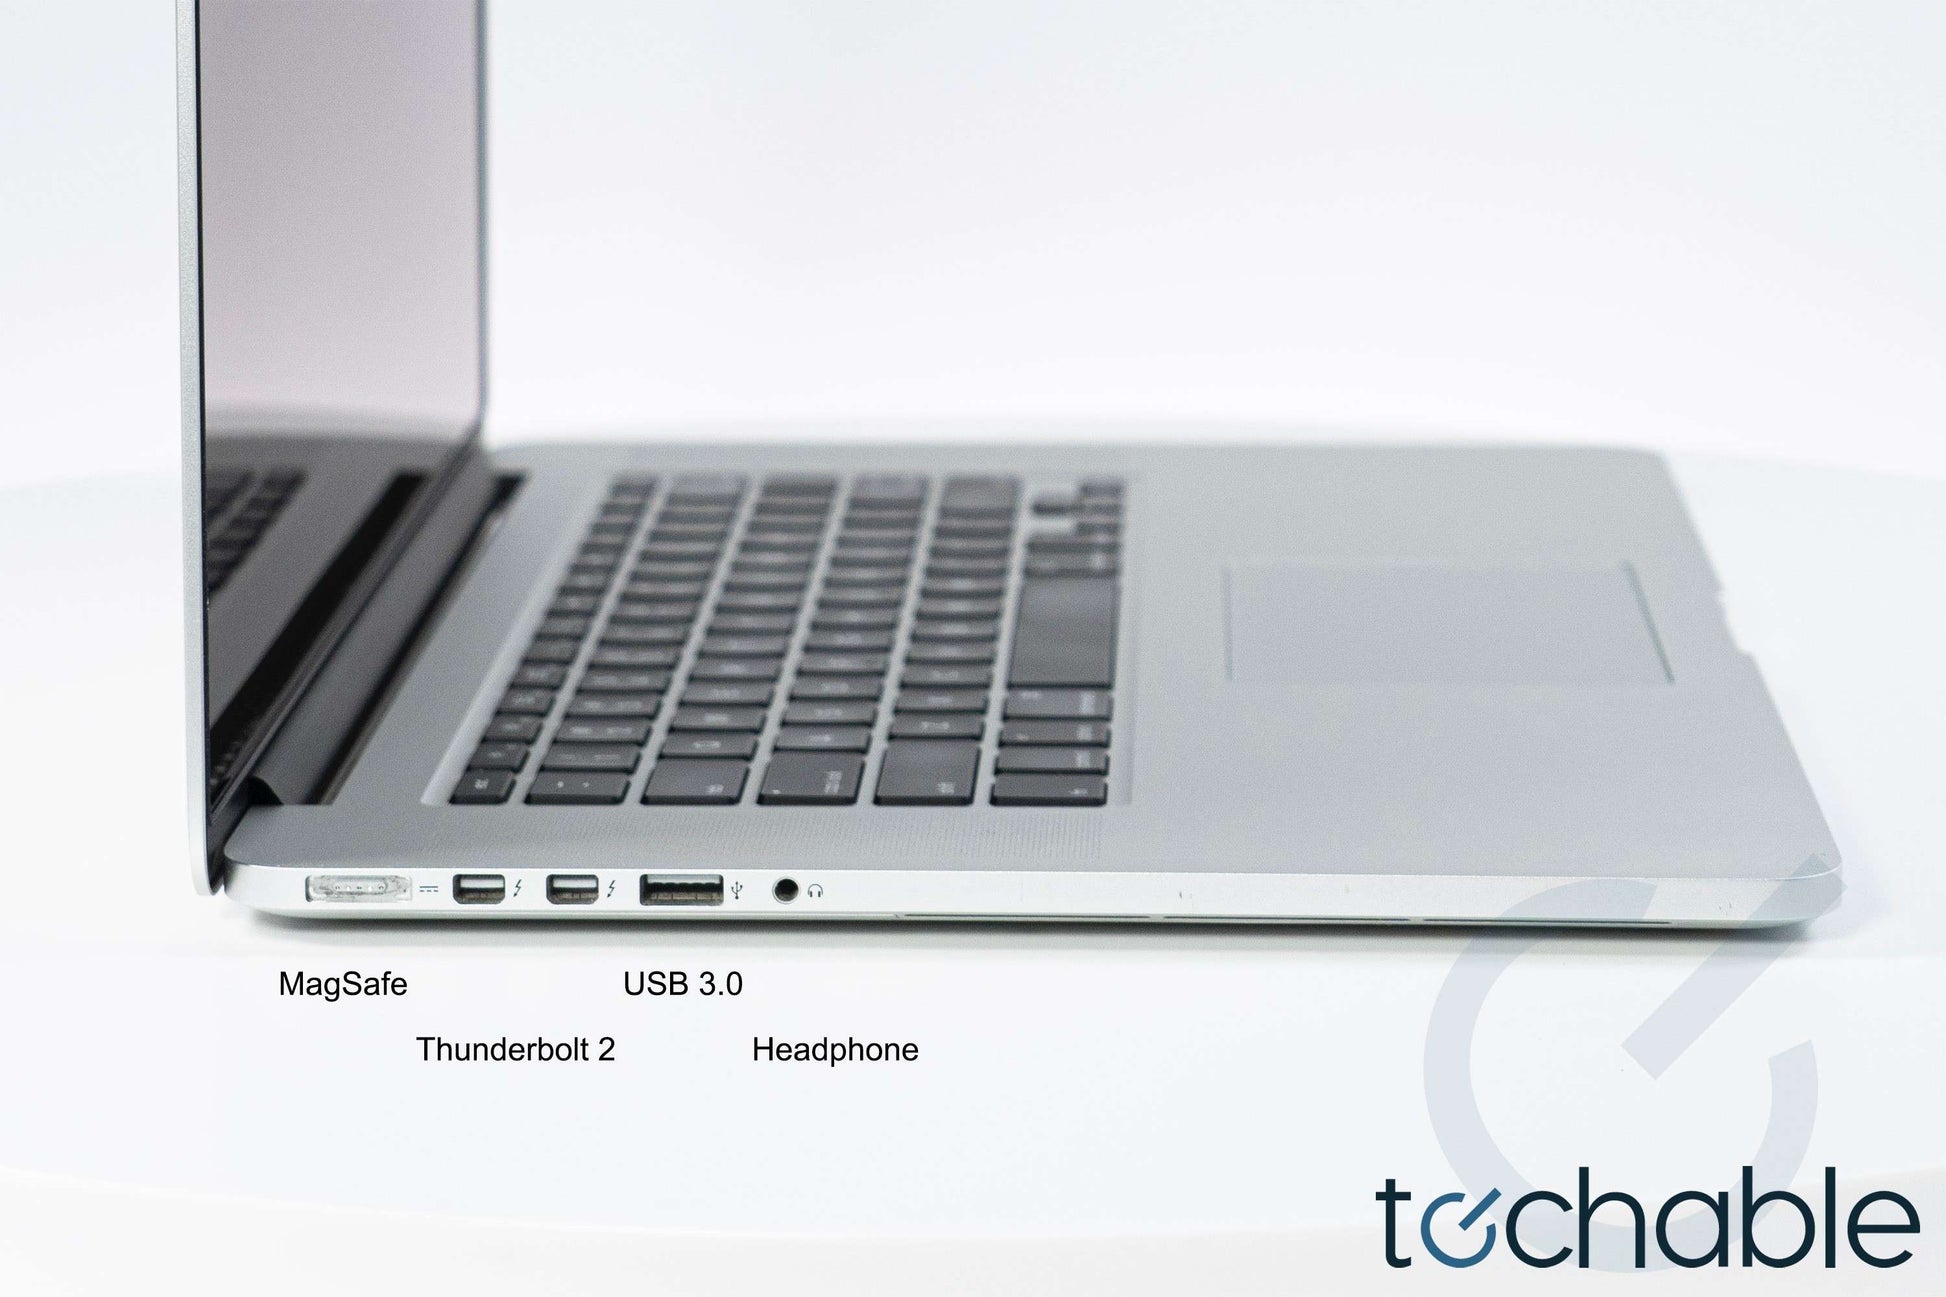 Apple MacBook Pro Retina 15-Inch 2.0GHz i7-4750HQ Quad-Core ME293LLA Late 2013